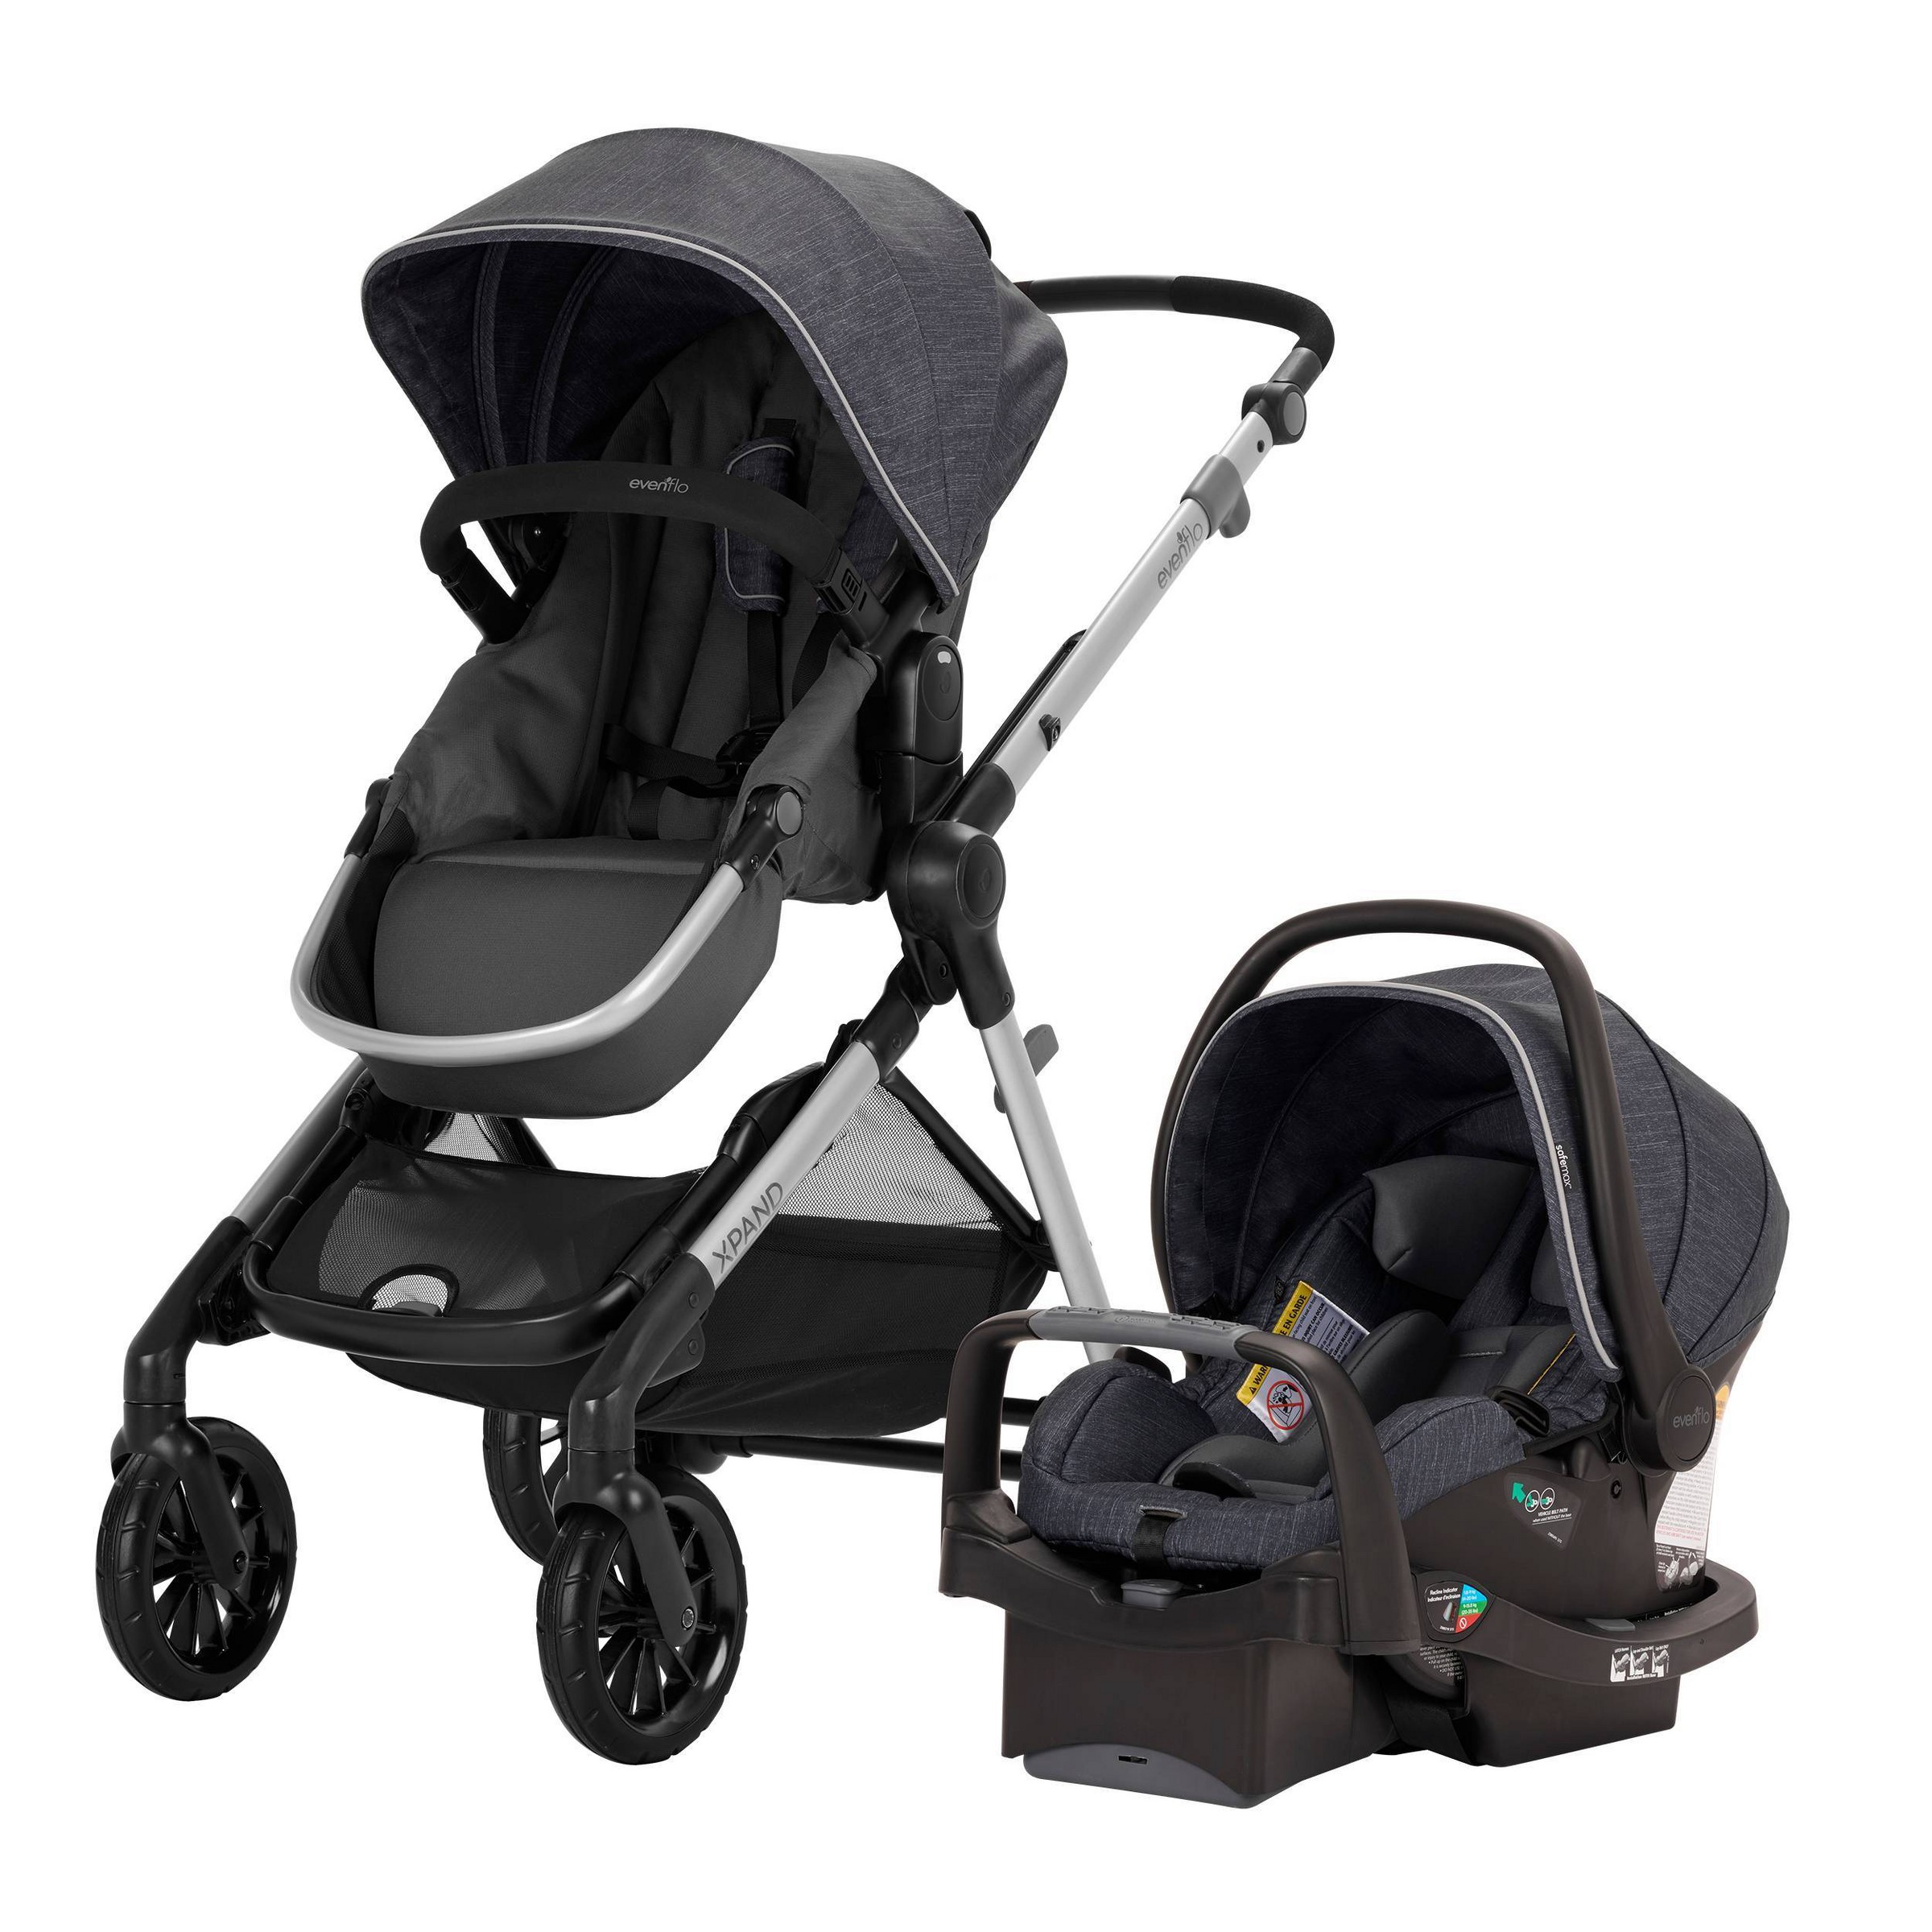 Universal Baby Stroller Infant Car Seat Adapter Fits to 95% Baby Strollers and Car-Seats Car Seat Adapter 